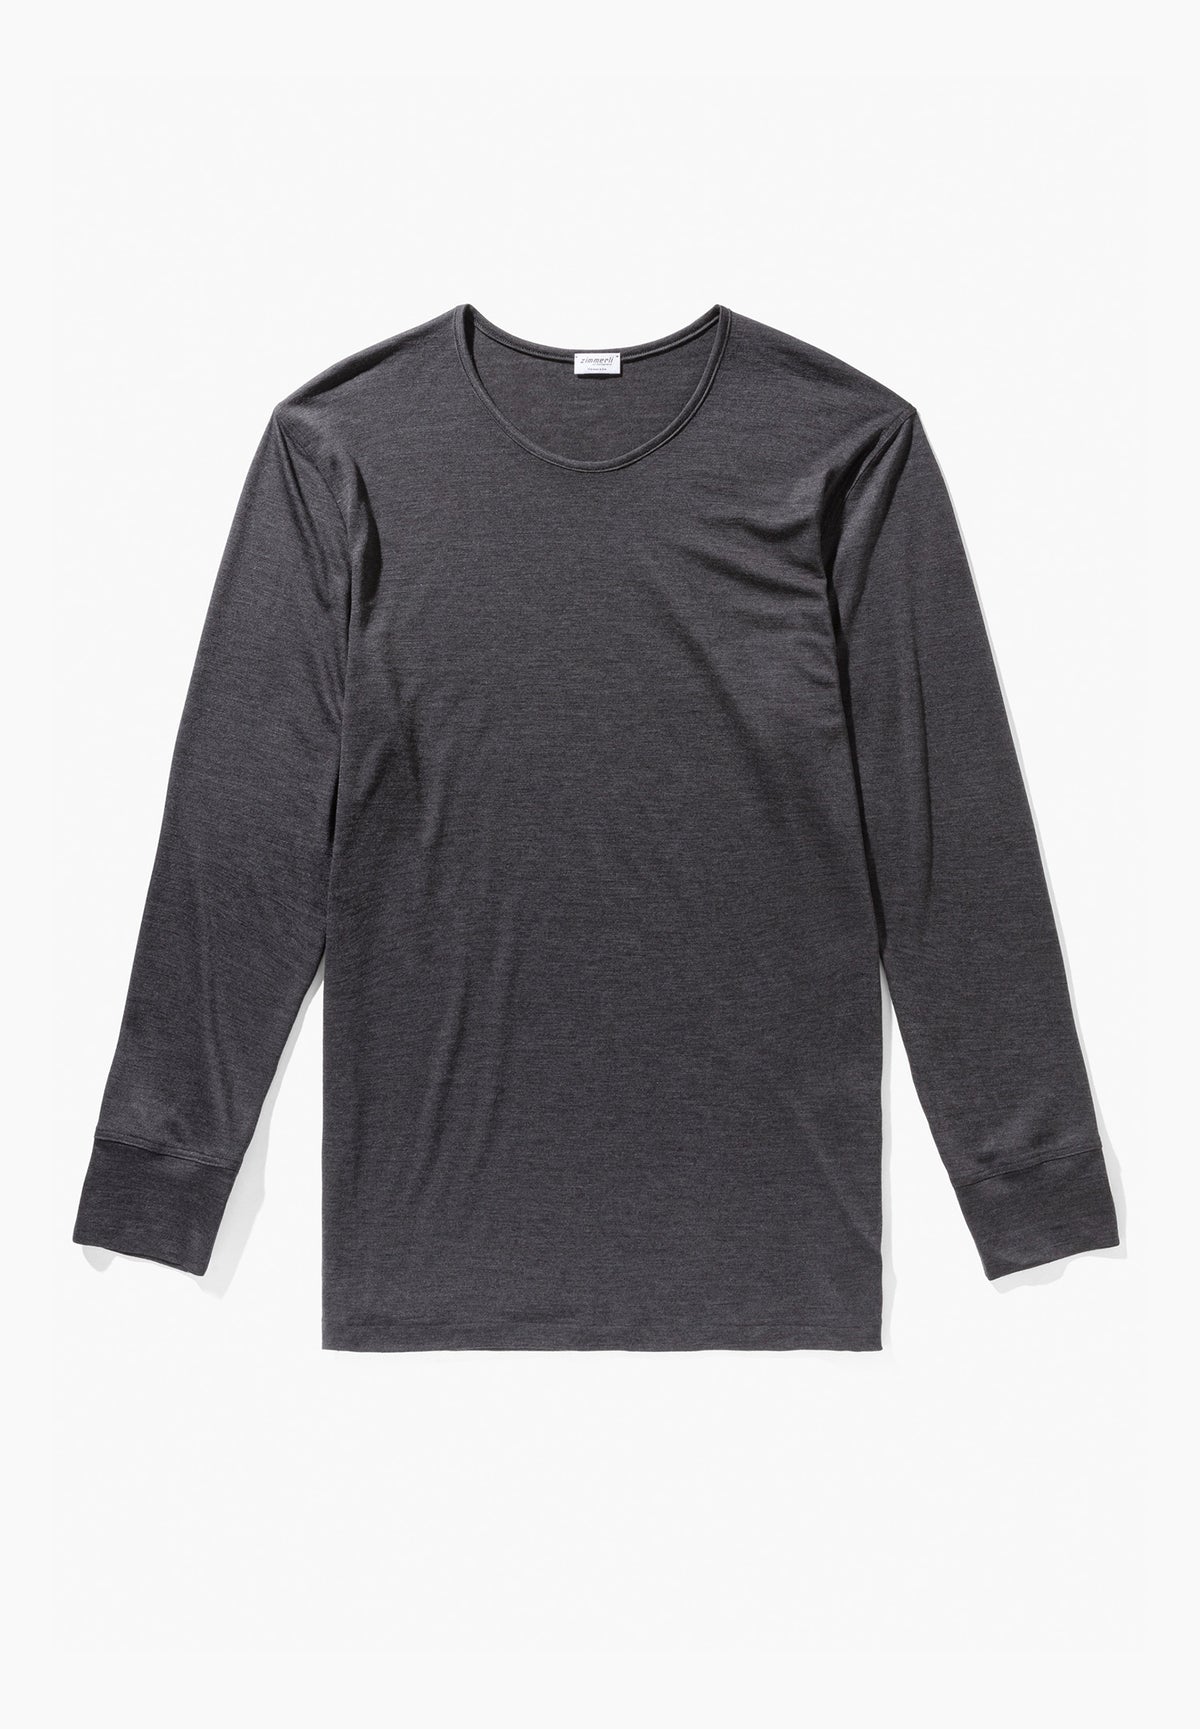 Wool &amp; Silk | T-Shirt à manches longues - charcoal